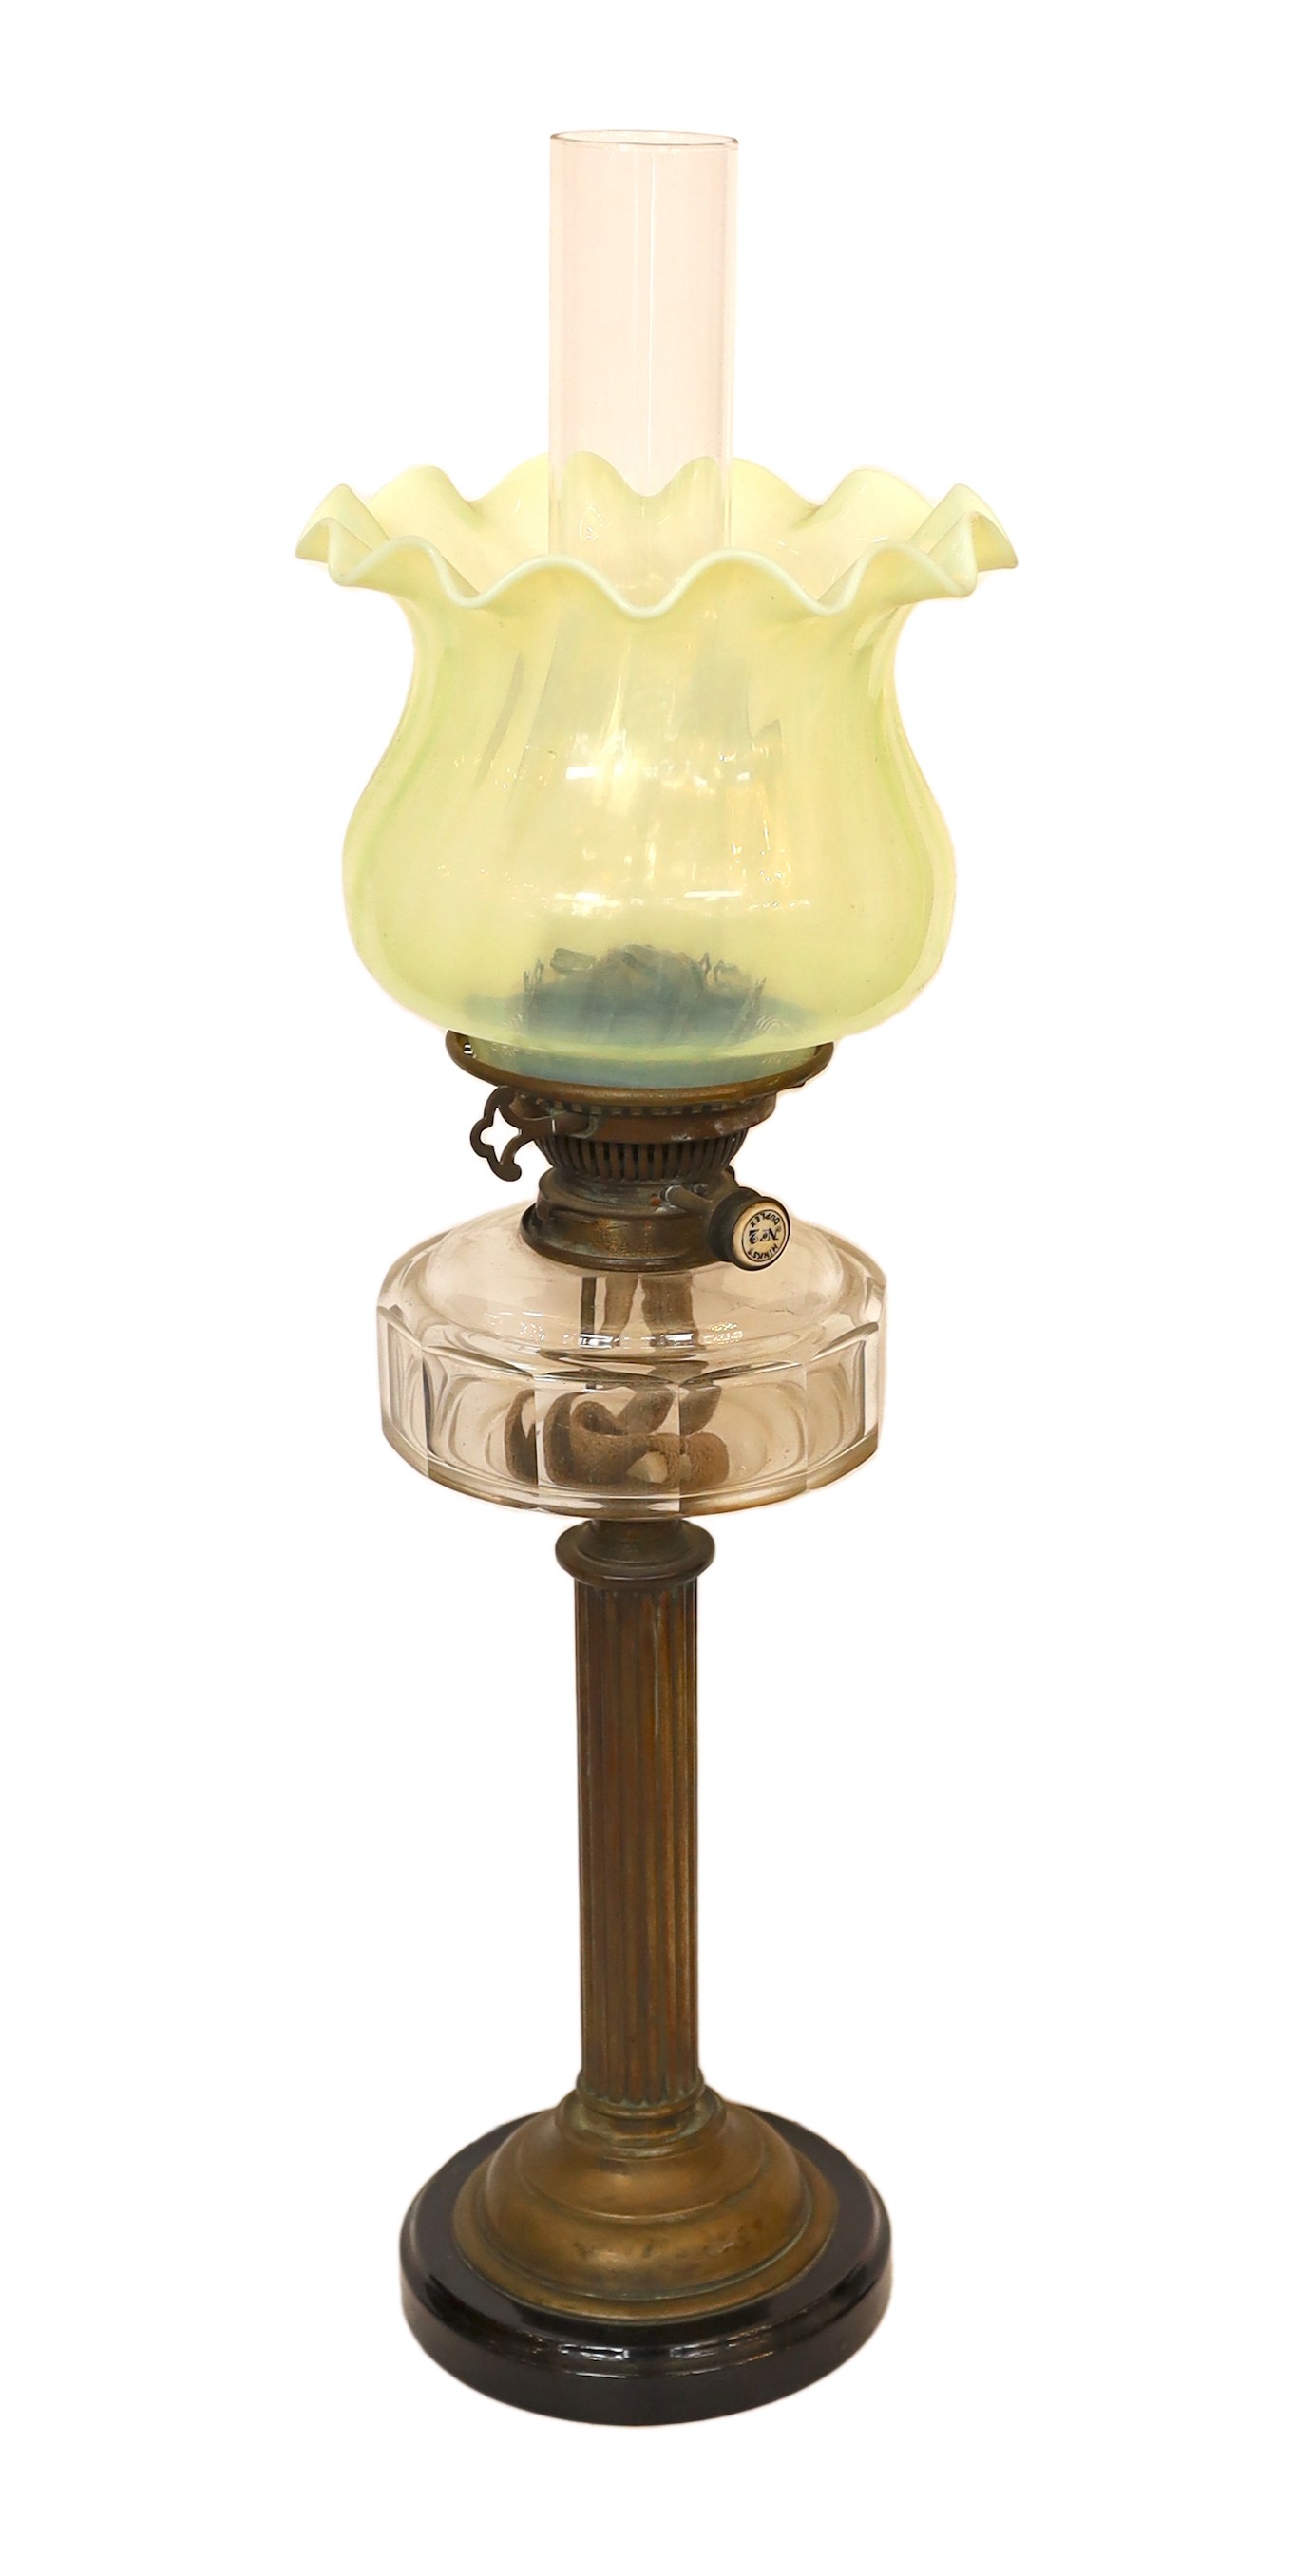 An Edwardian brass oil lamp with cut glass reservoir, Hinks No2 duplex mechanism, Vaseline shade and flue, height overall 67cm